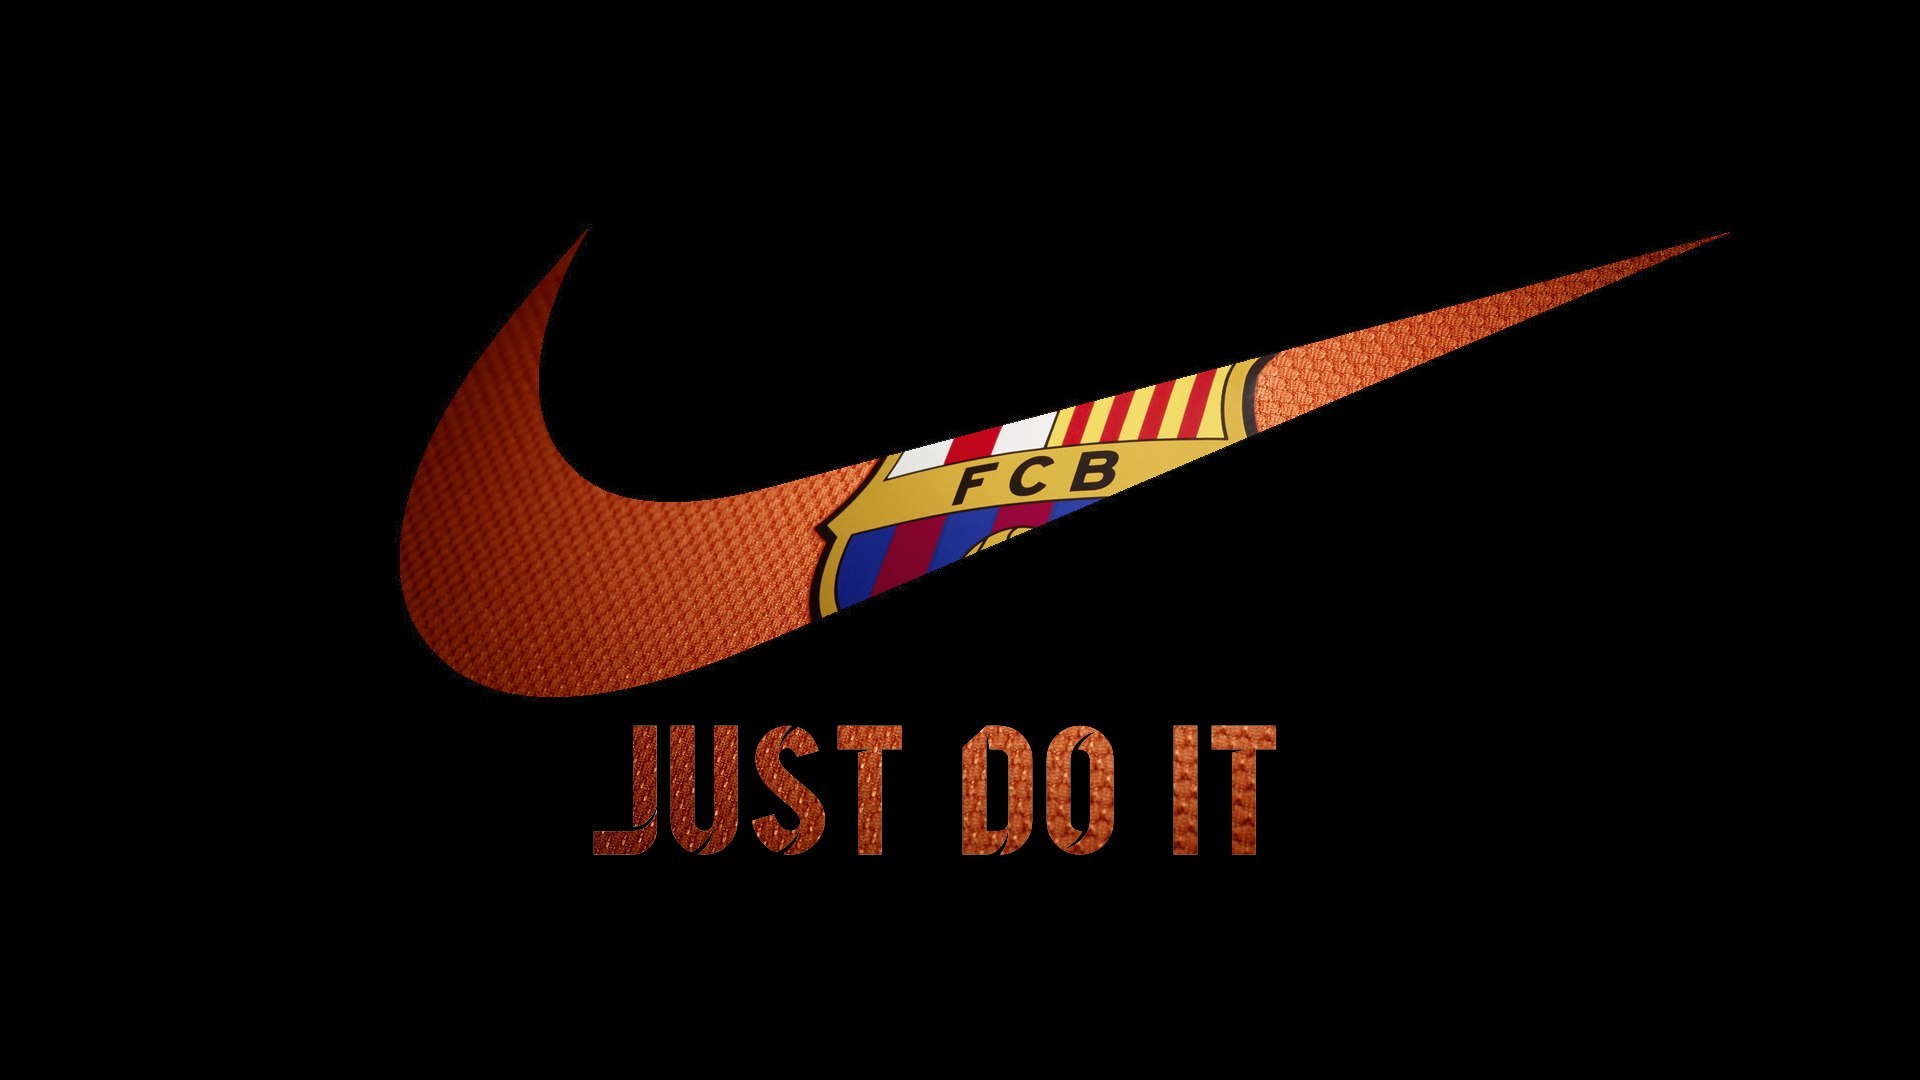 Nike FC Barcelona 1920x1080